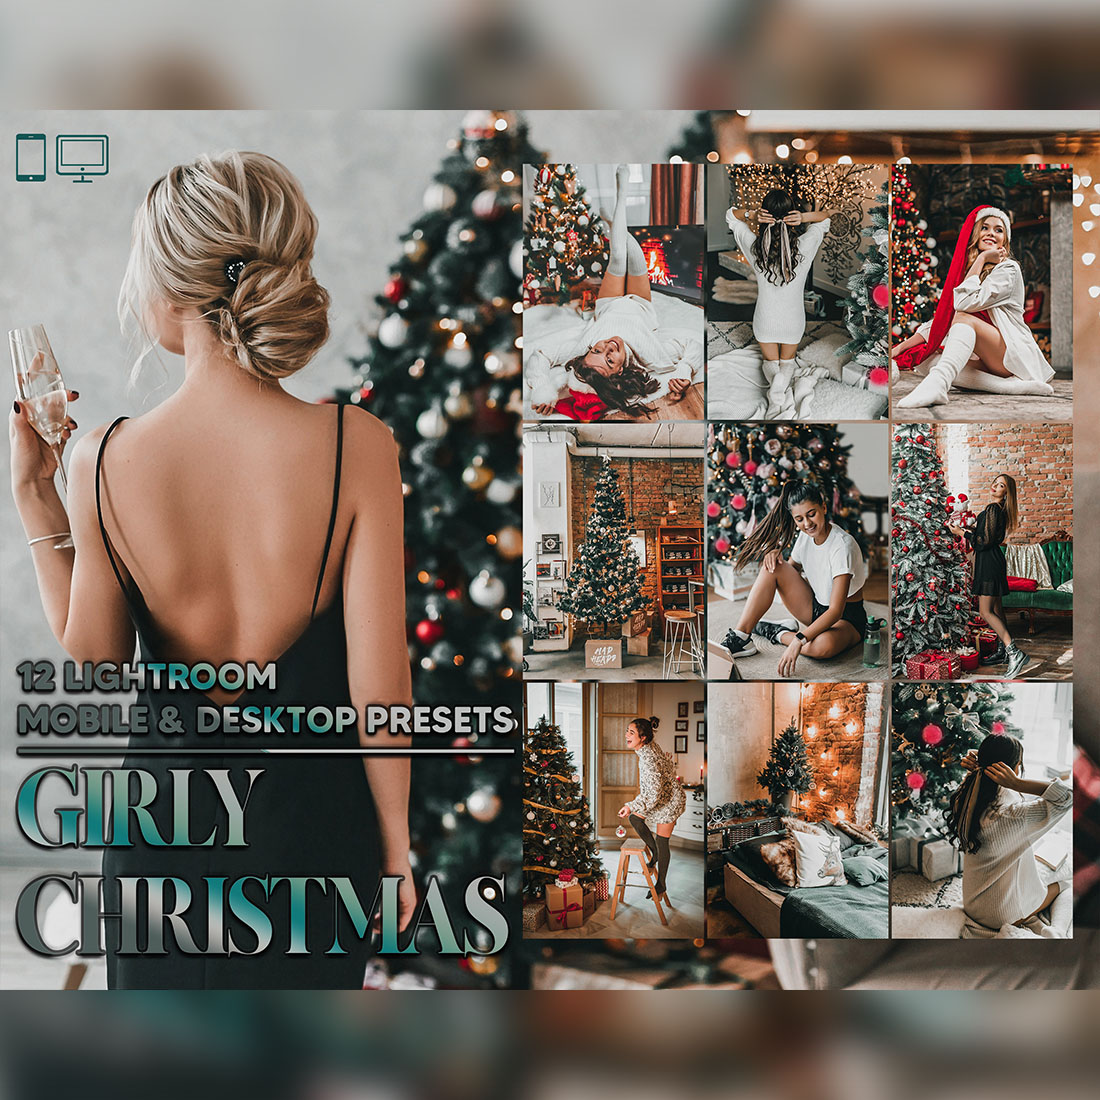 12 Girly Christmas Lightroom Presets, Holiday Mobile Preset, December Xmas Desktop LR Filter Scheme Lifestyle Theme For Portrait, Instagram cover image.